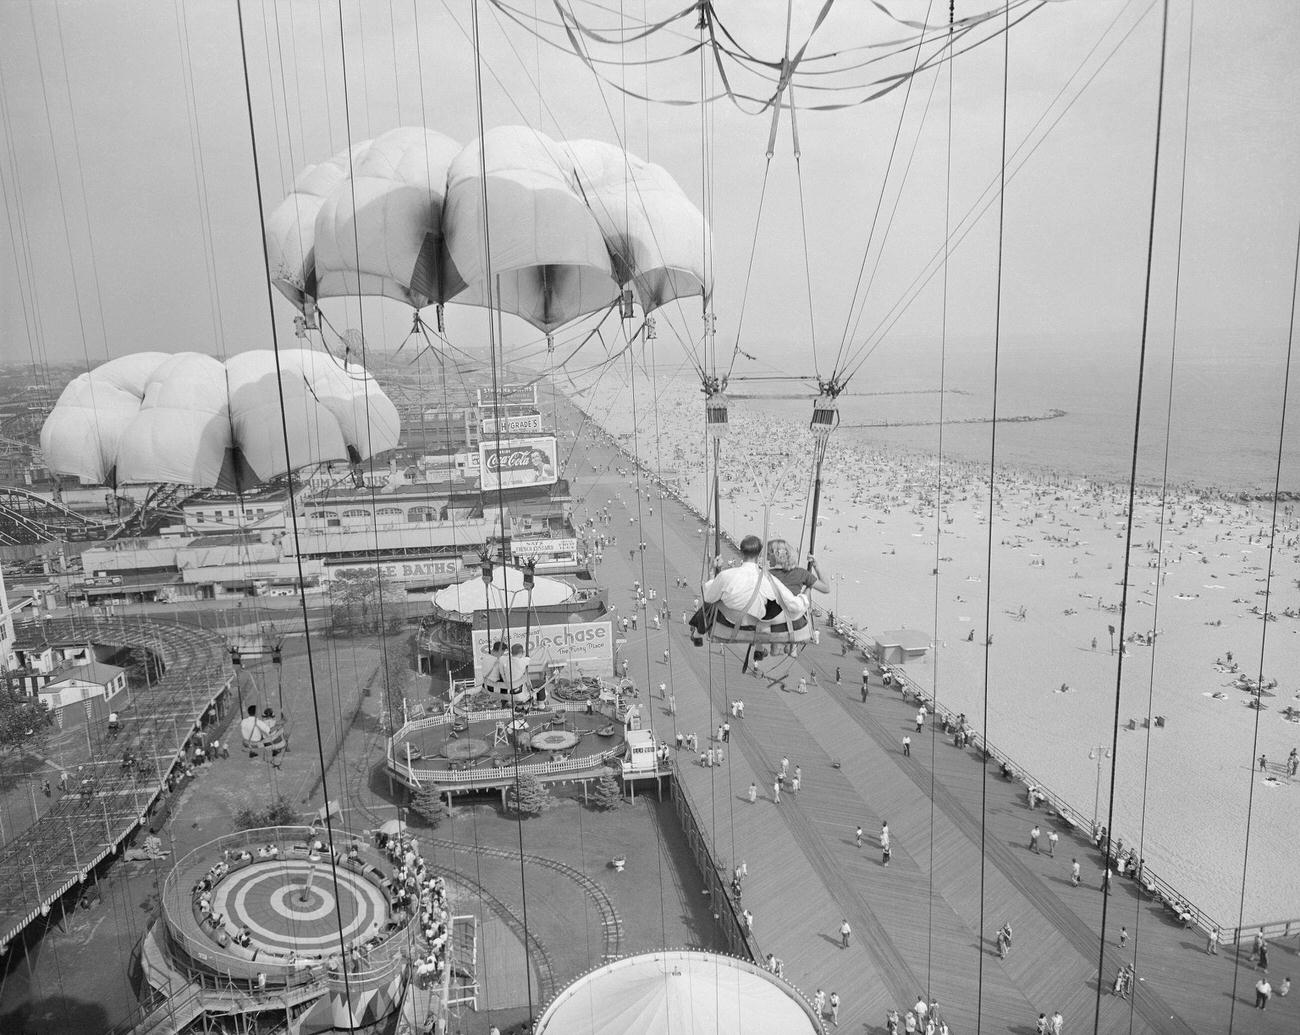 Parachute Ride Over Coney Island Boardwalk